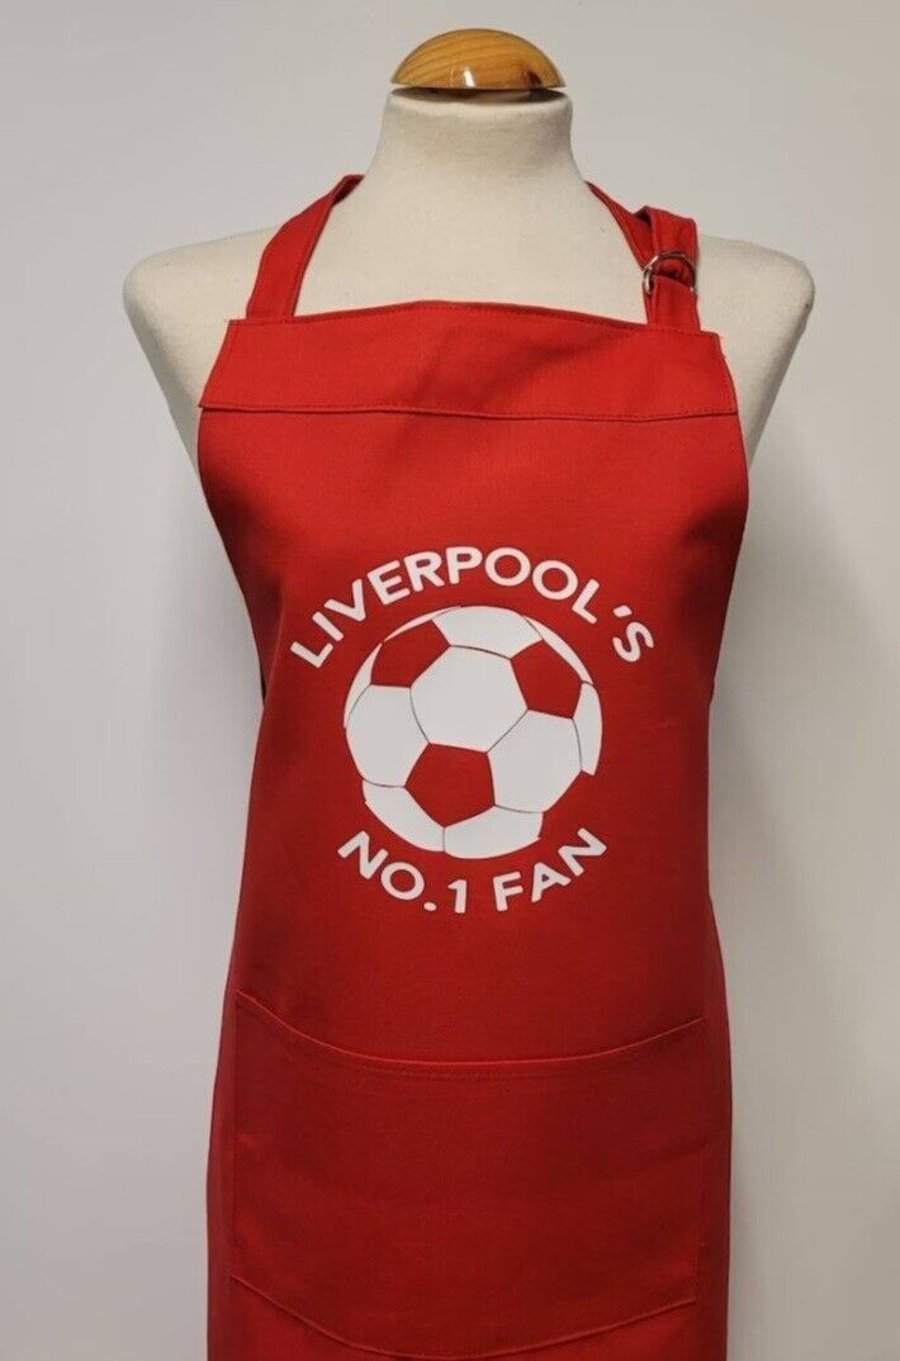 Liverpool - No.1 fan. Medium cotton apron with pocket 